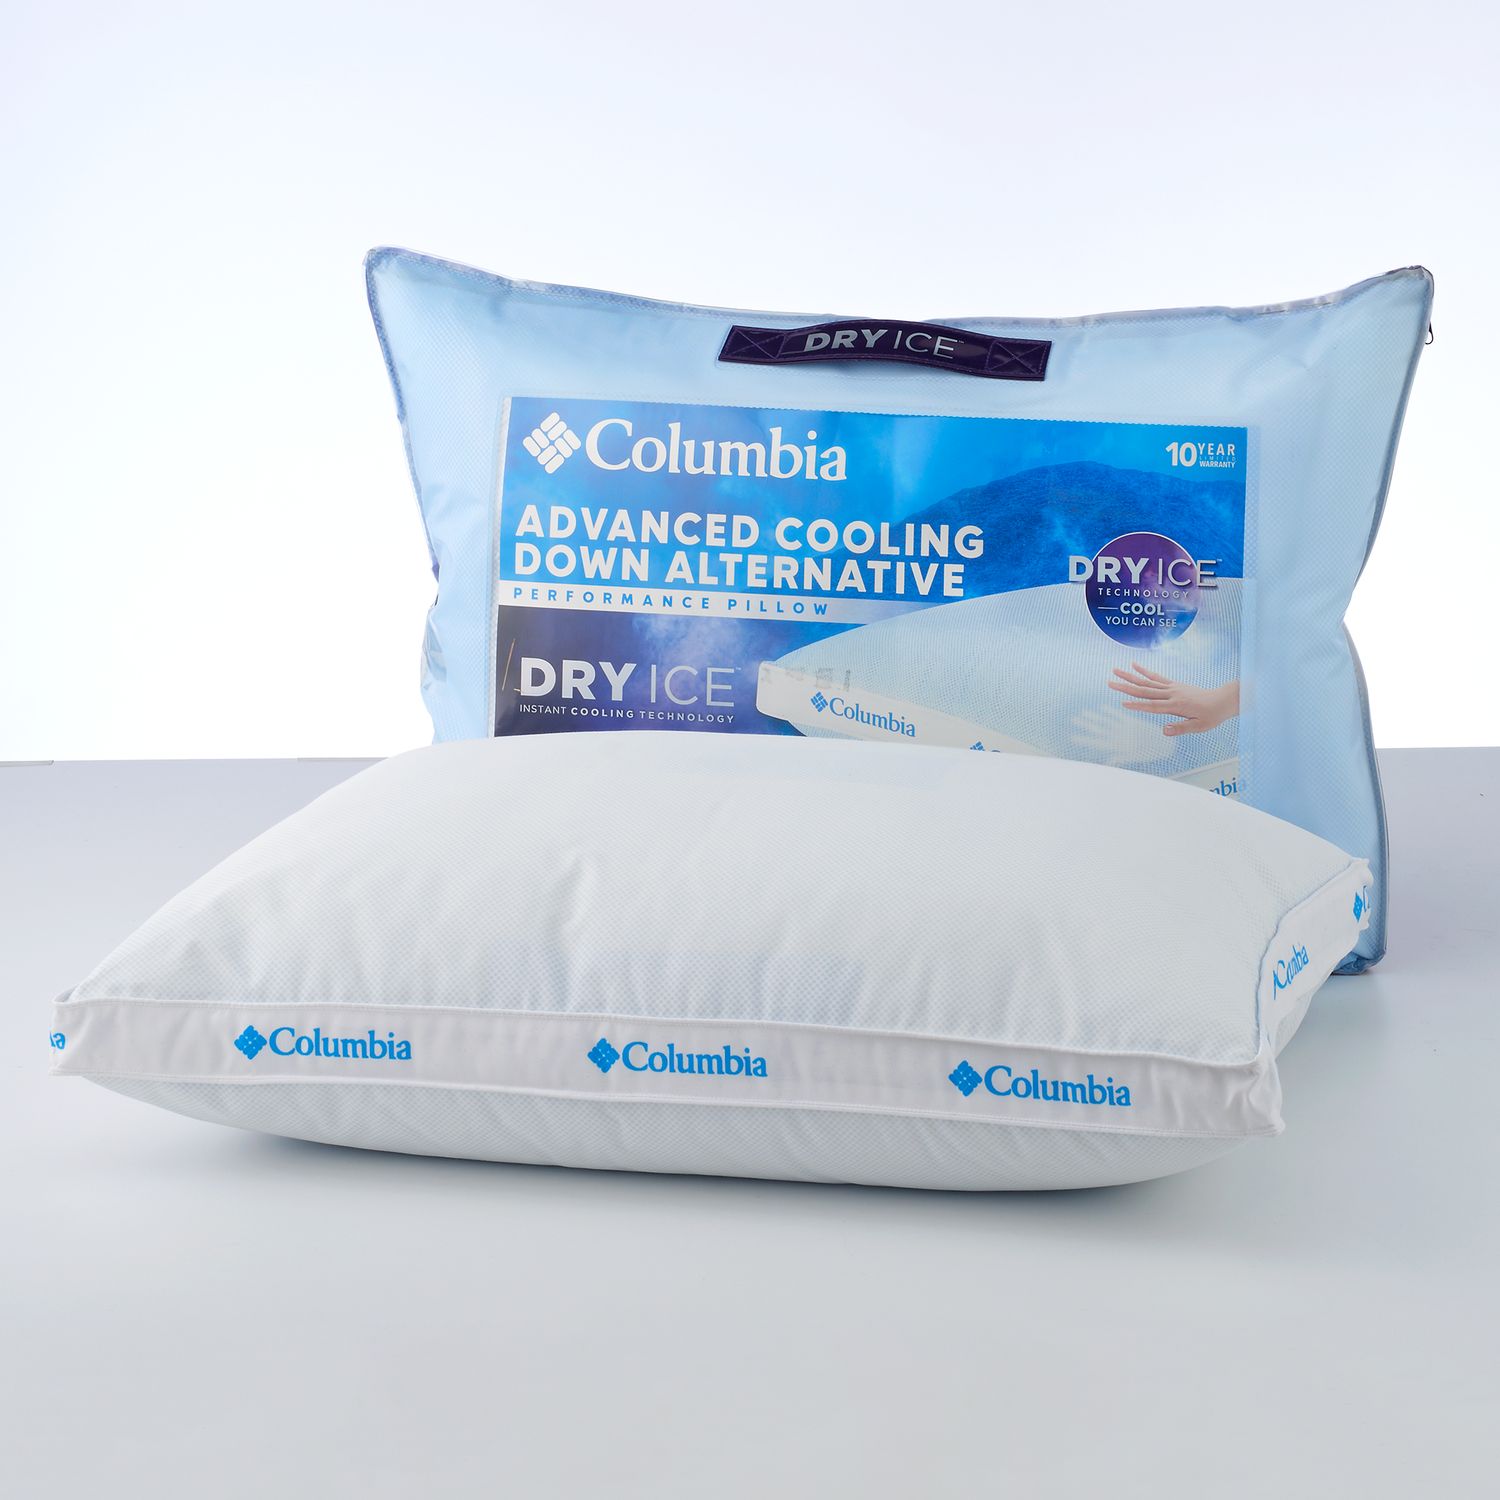 columbia ice fiber down alternative pillow